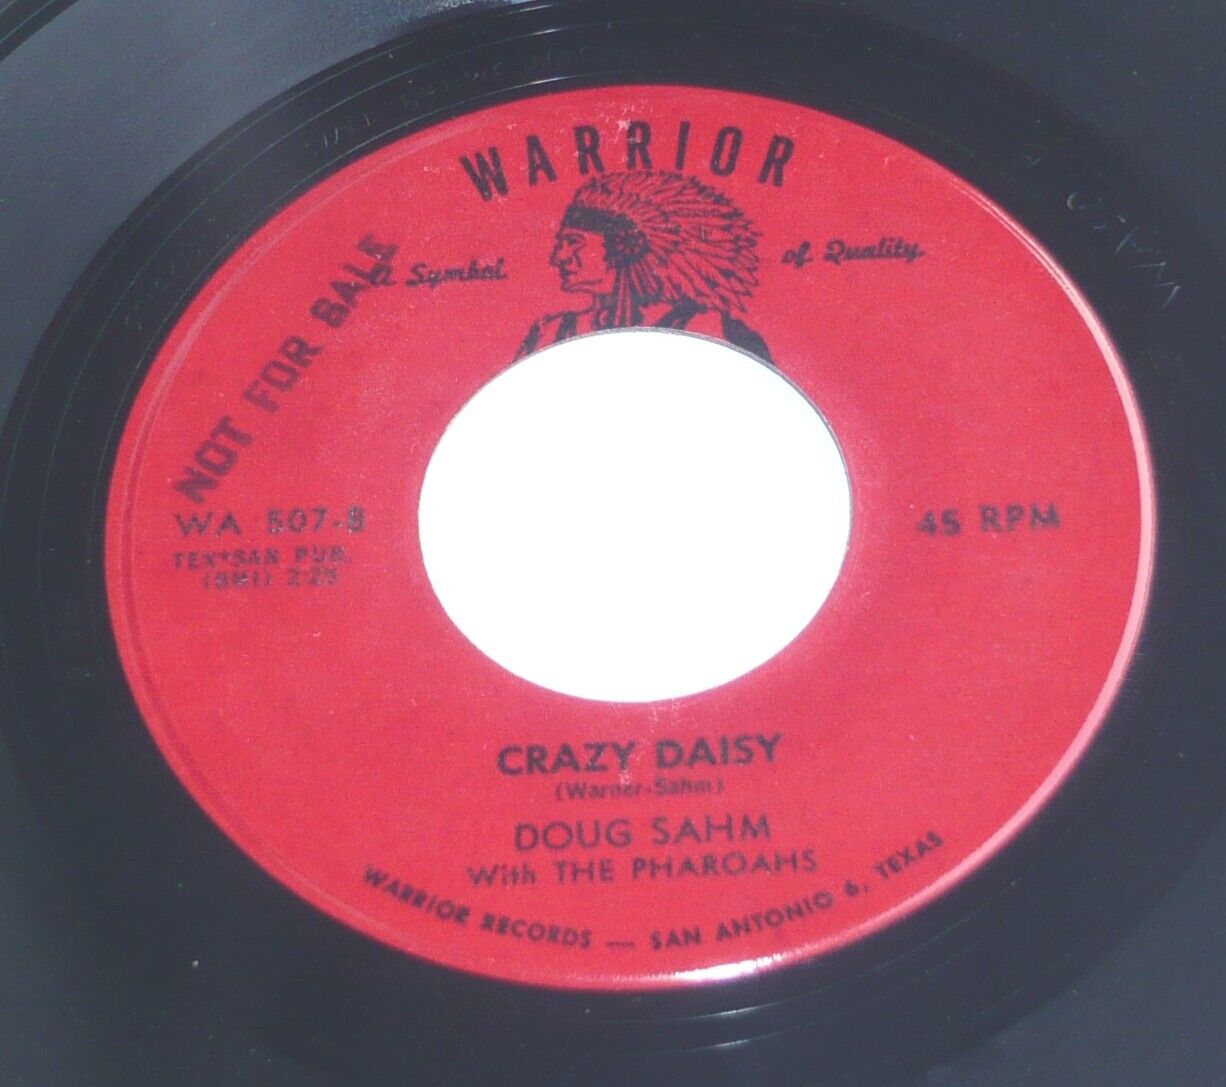 DOUG SAHM & THE PHAROAHS "Crazy Daisy / If I Ever Need You" Txs Rocker 7" EX 50s